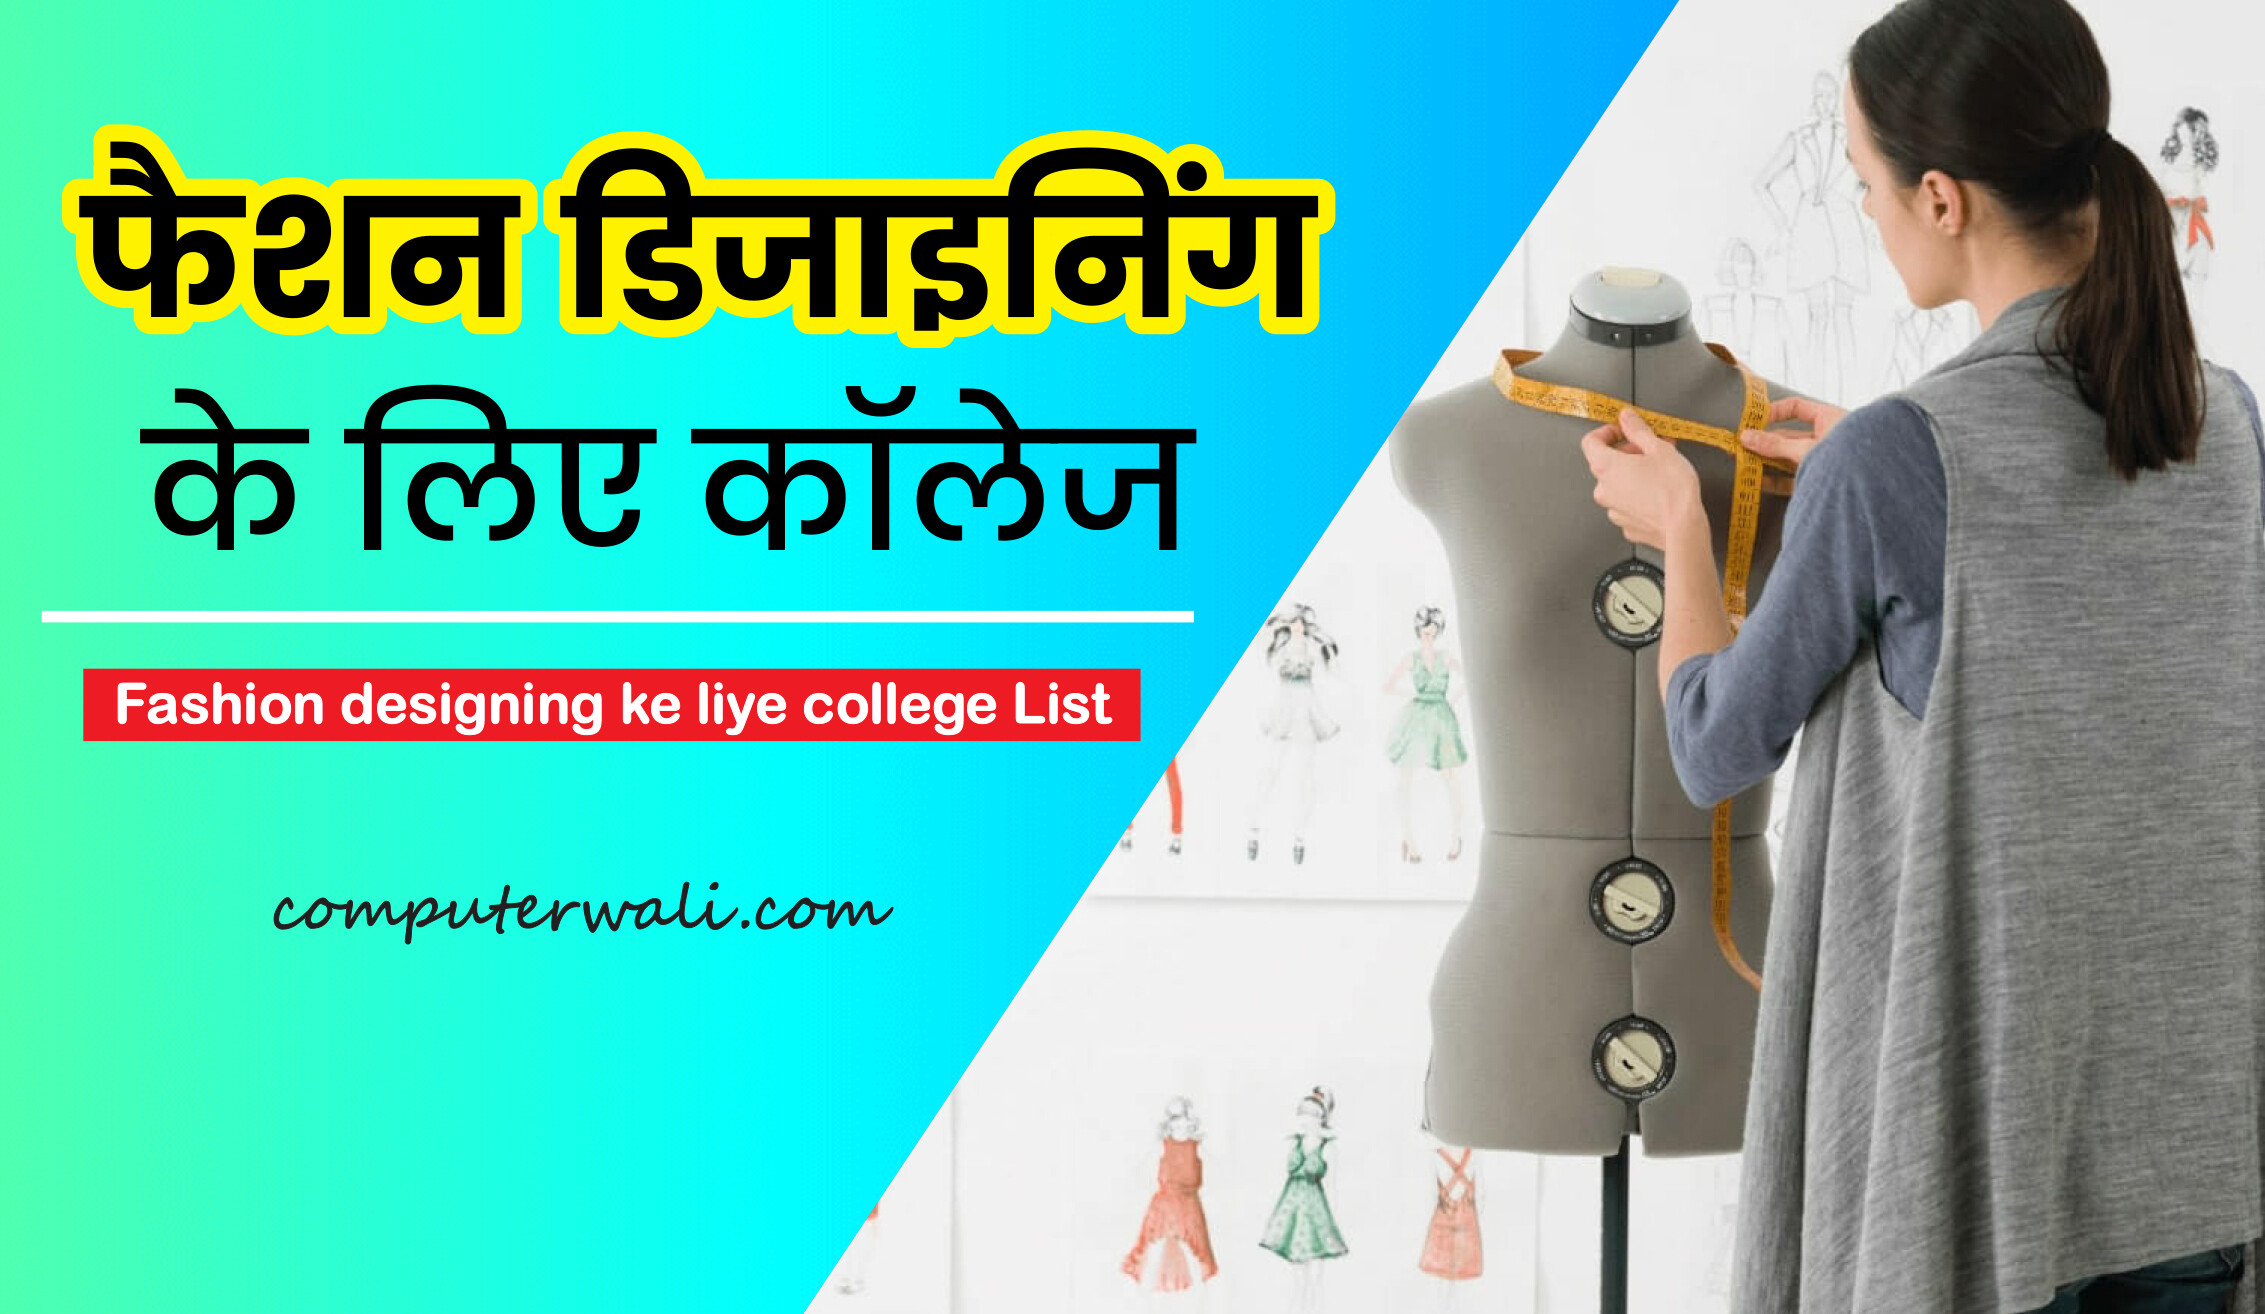 Fashion designing ke liye college List